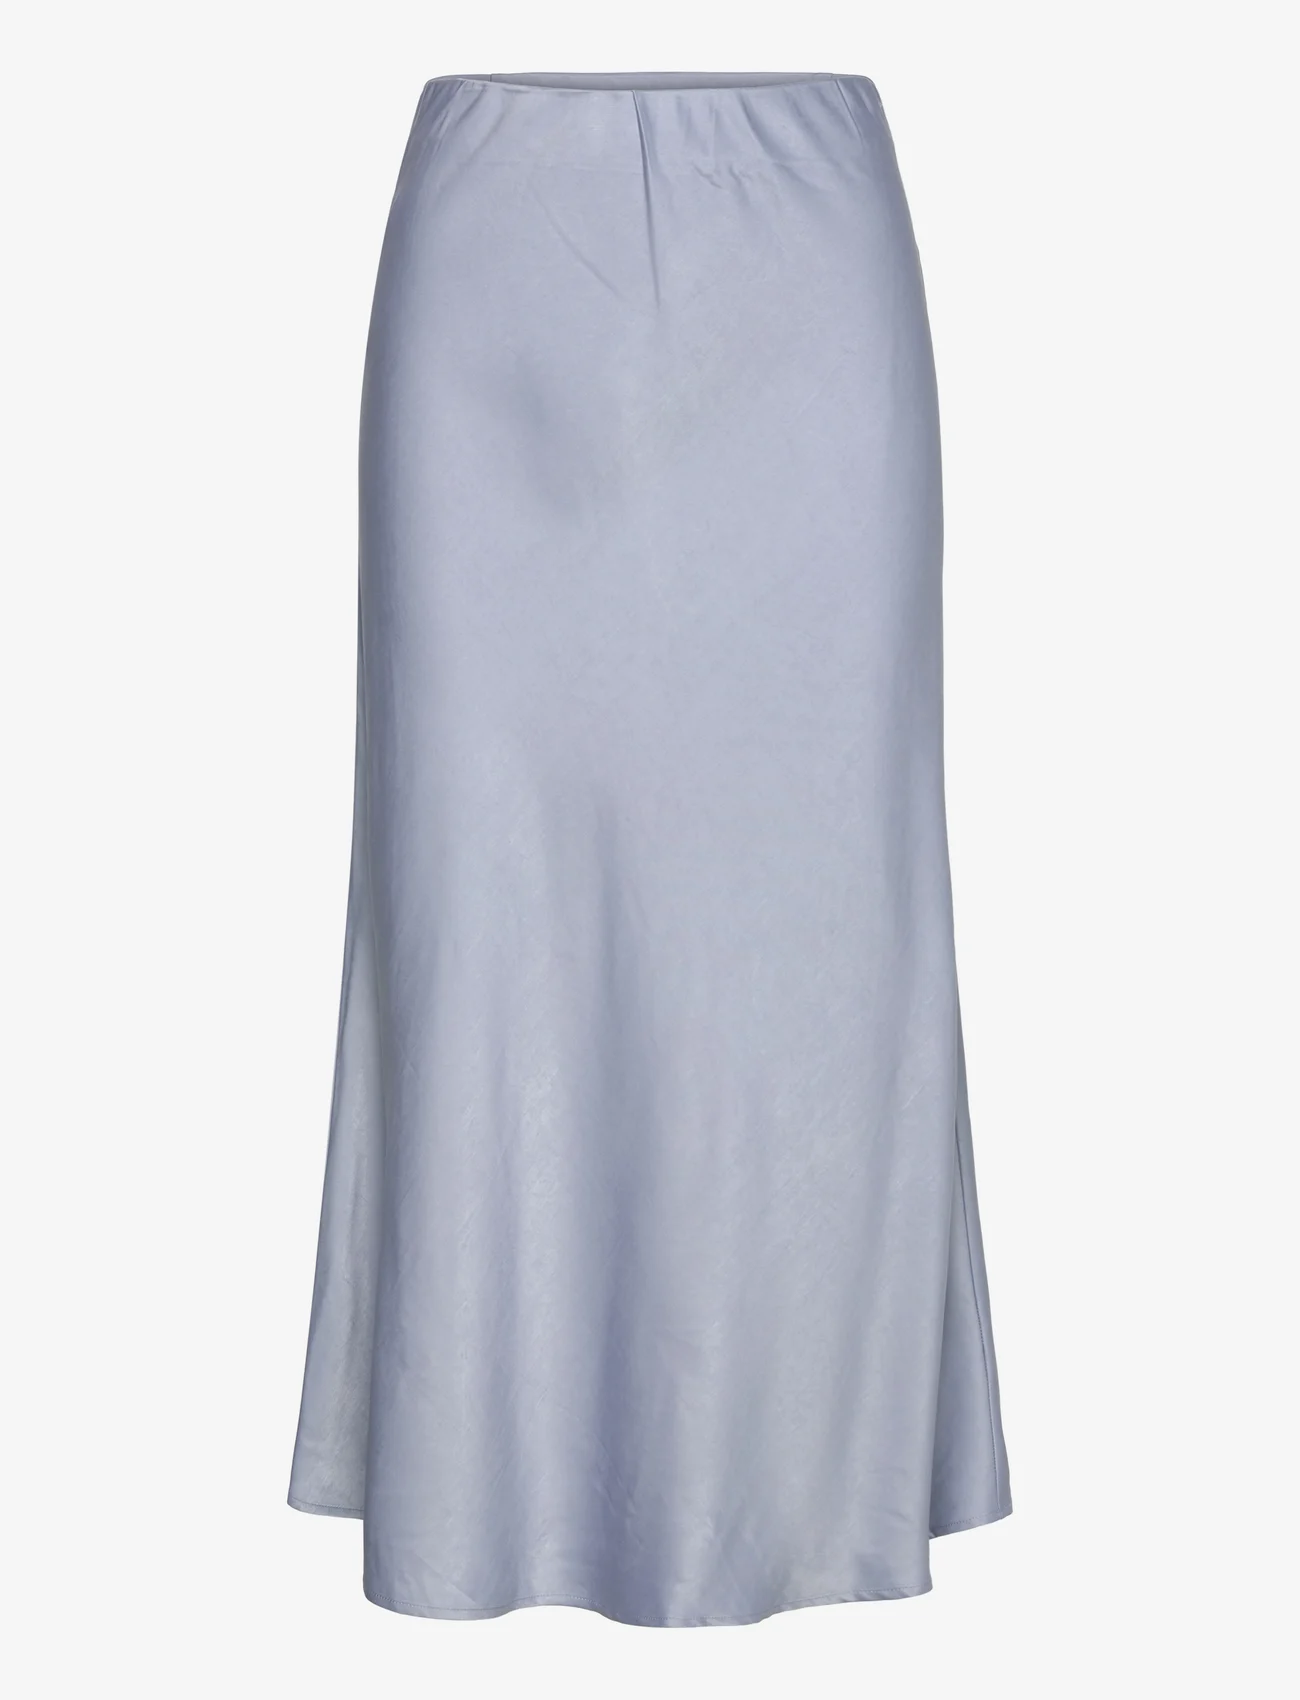 A-View - Carry sateen skirt - satinnederdele - blue - 0